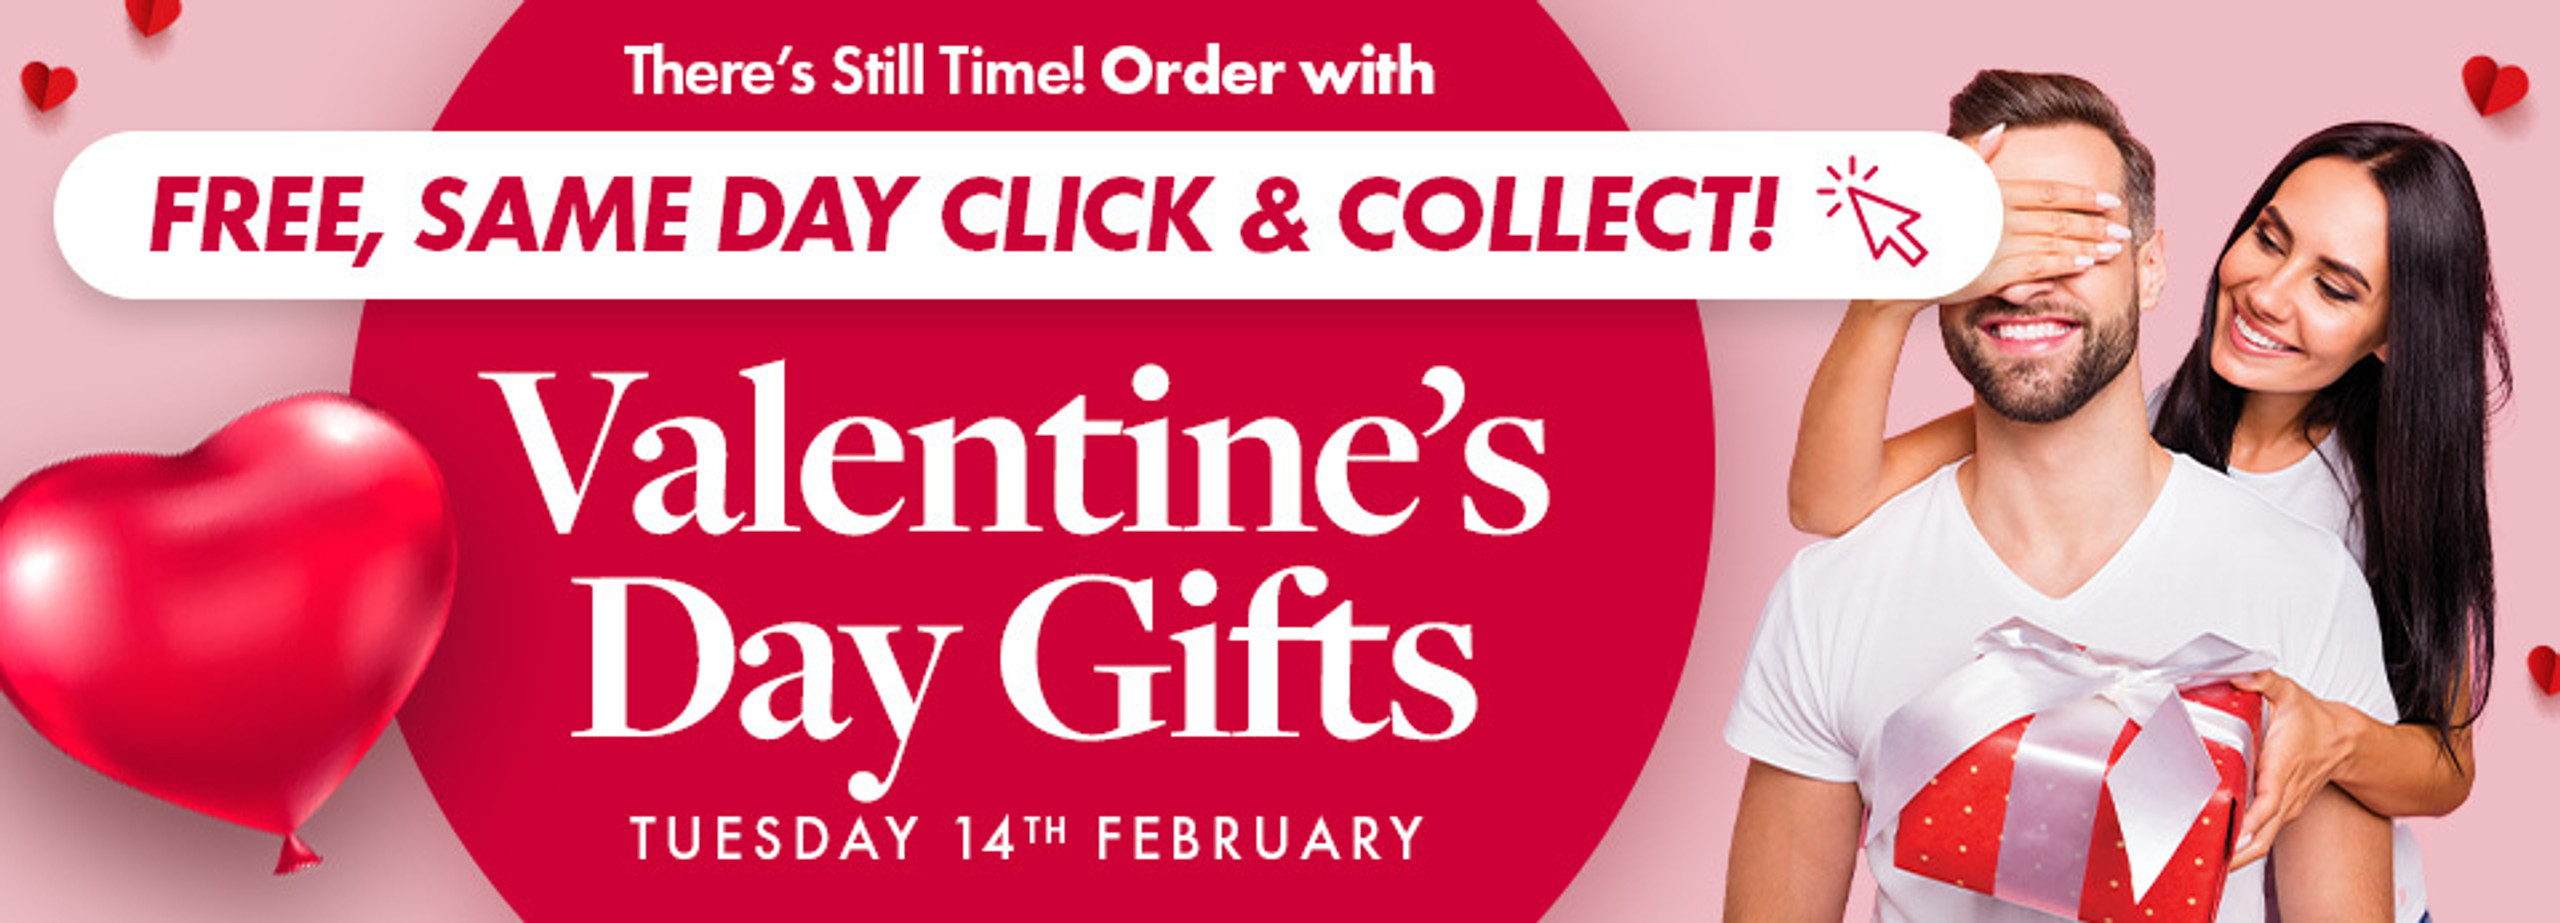 Valentine’s Gifts & Gift Ideas: Shop Valentine’s Day Gifts